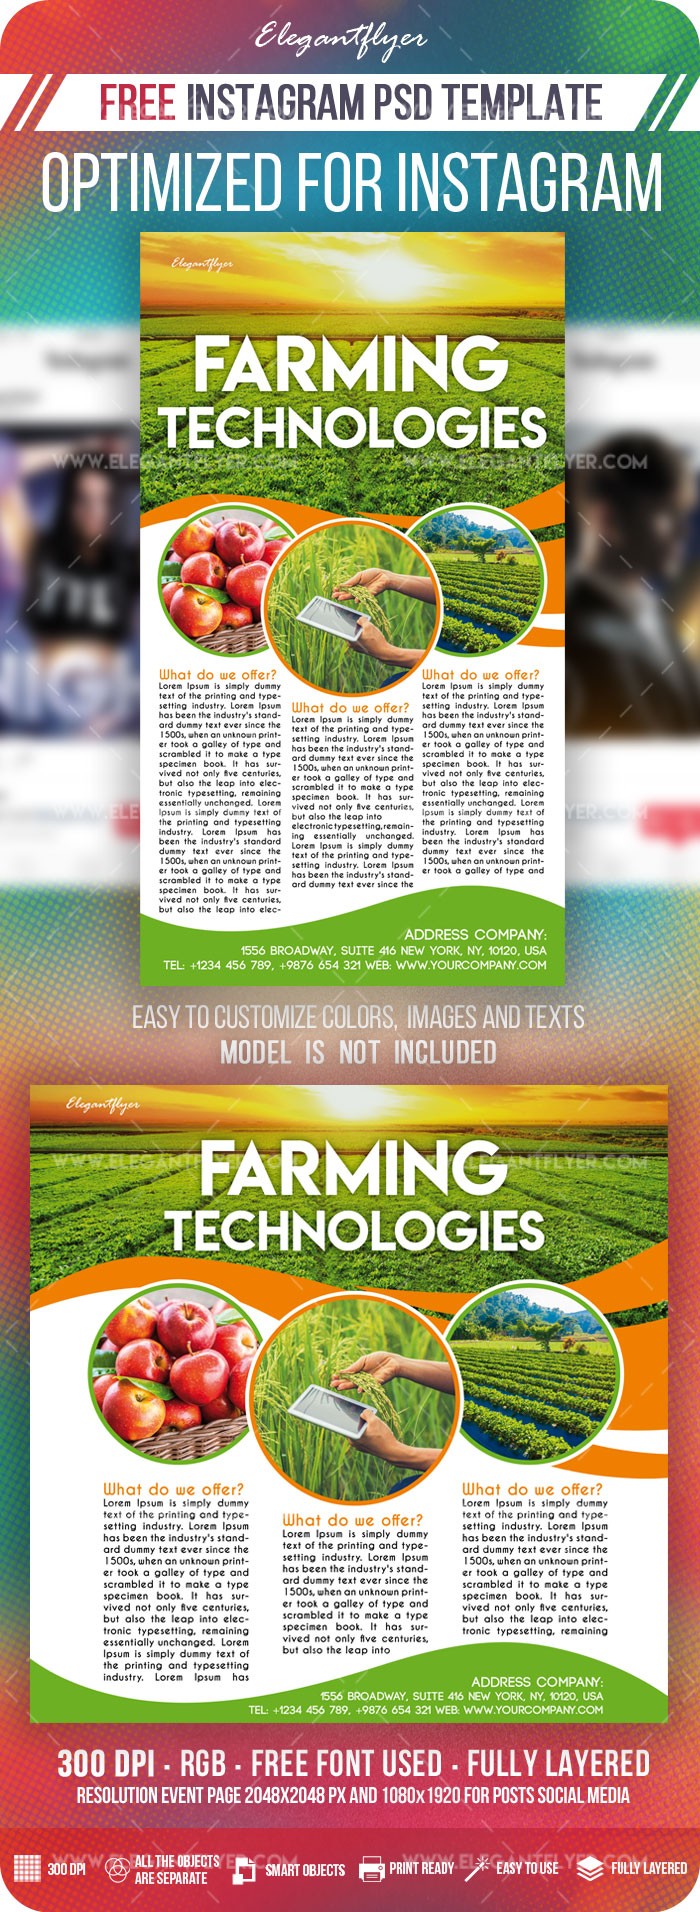 Tecnologie dell'agricoltura Instagram by ElegantFlyer